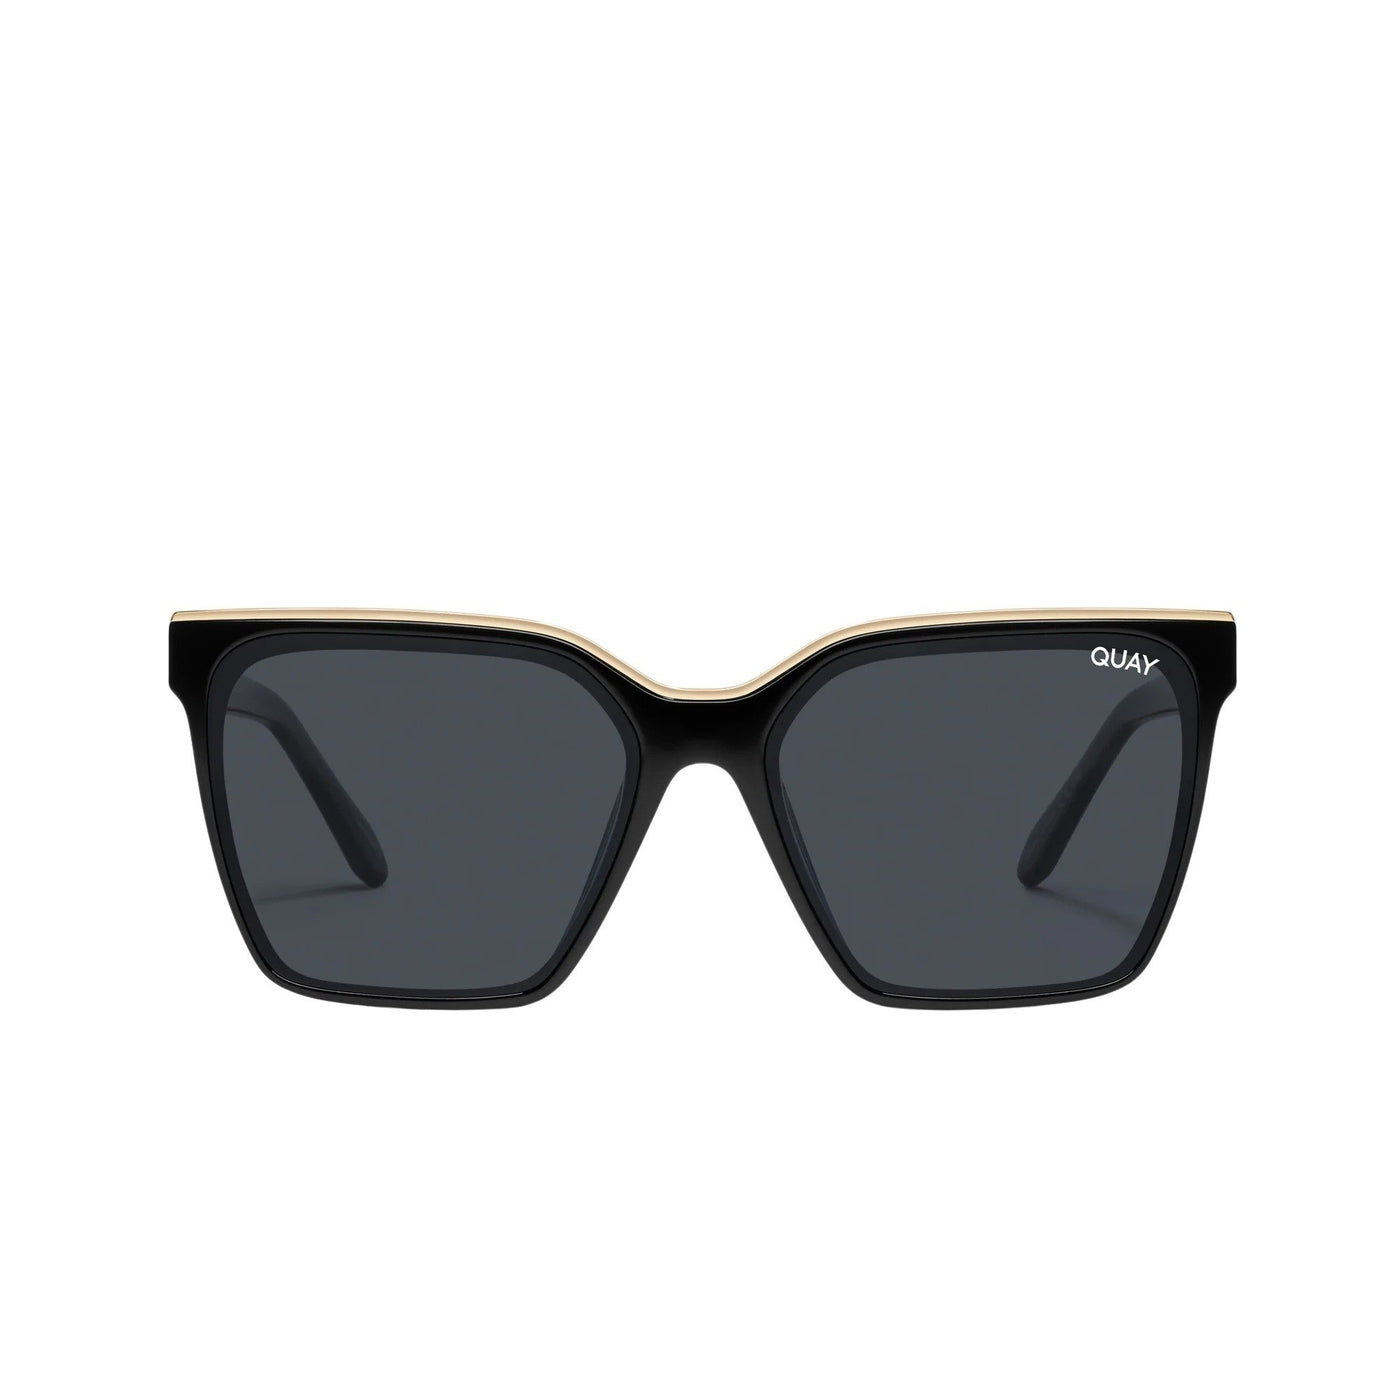 Quay Women's Level Up Square Sunglasses (Black Gold Frame/Smoke Lens) - front